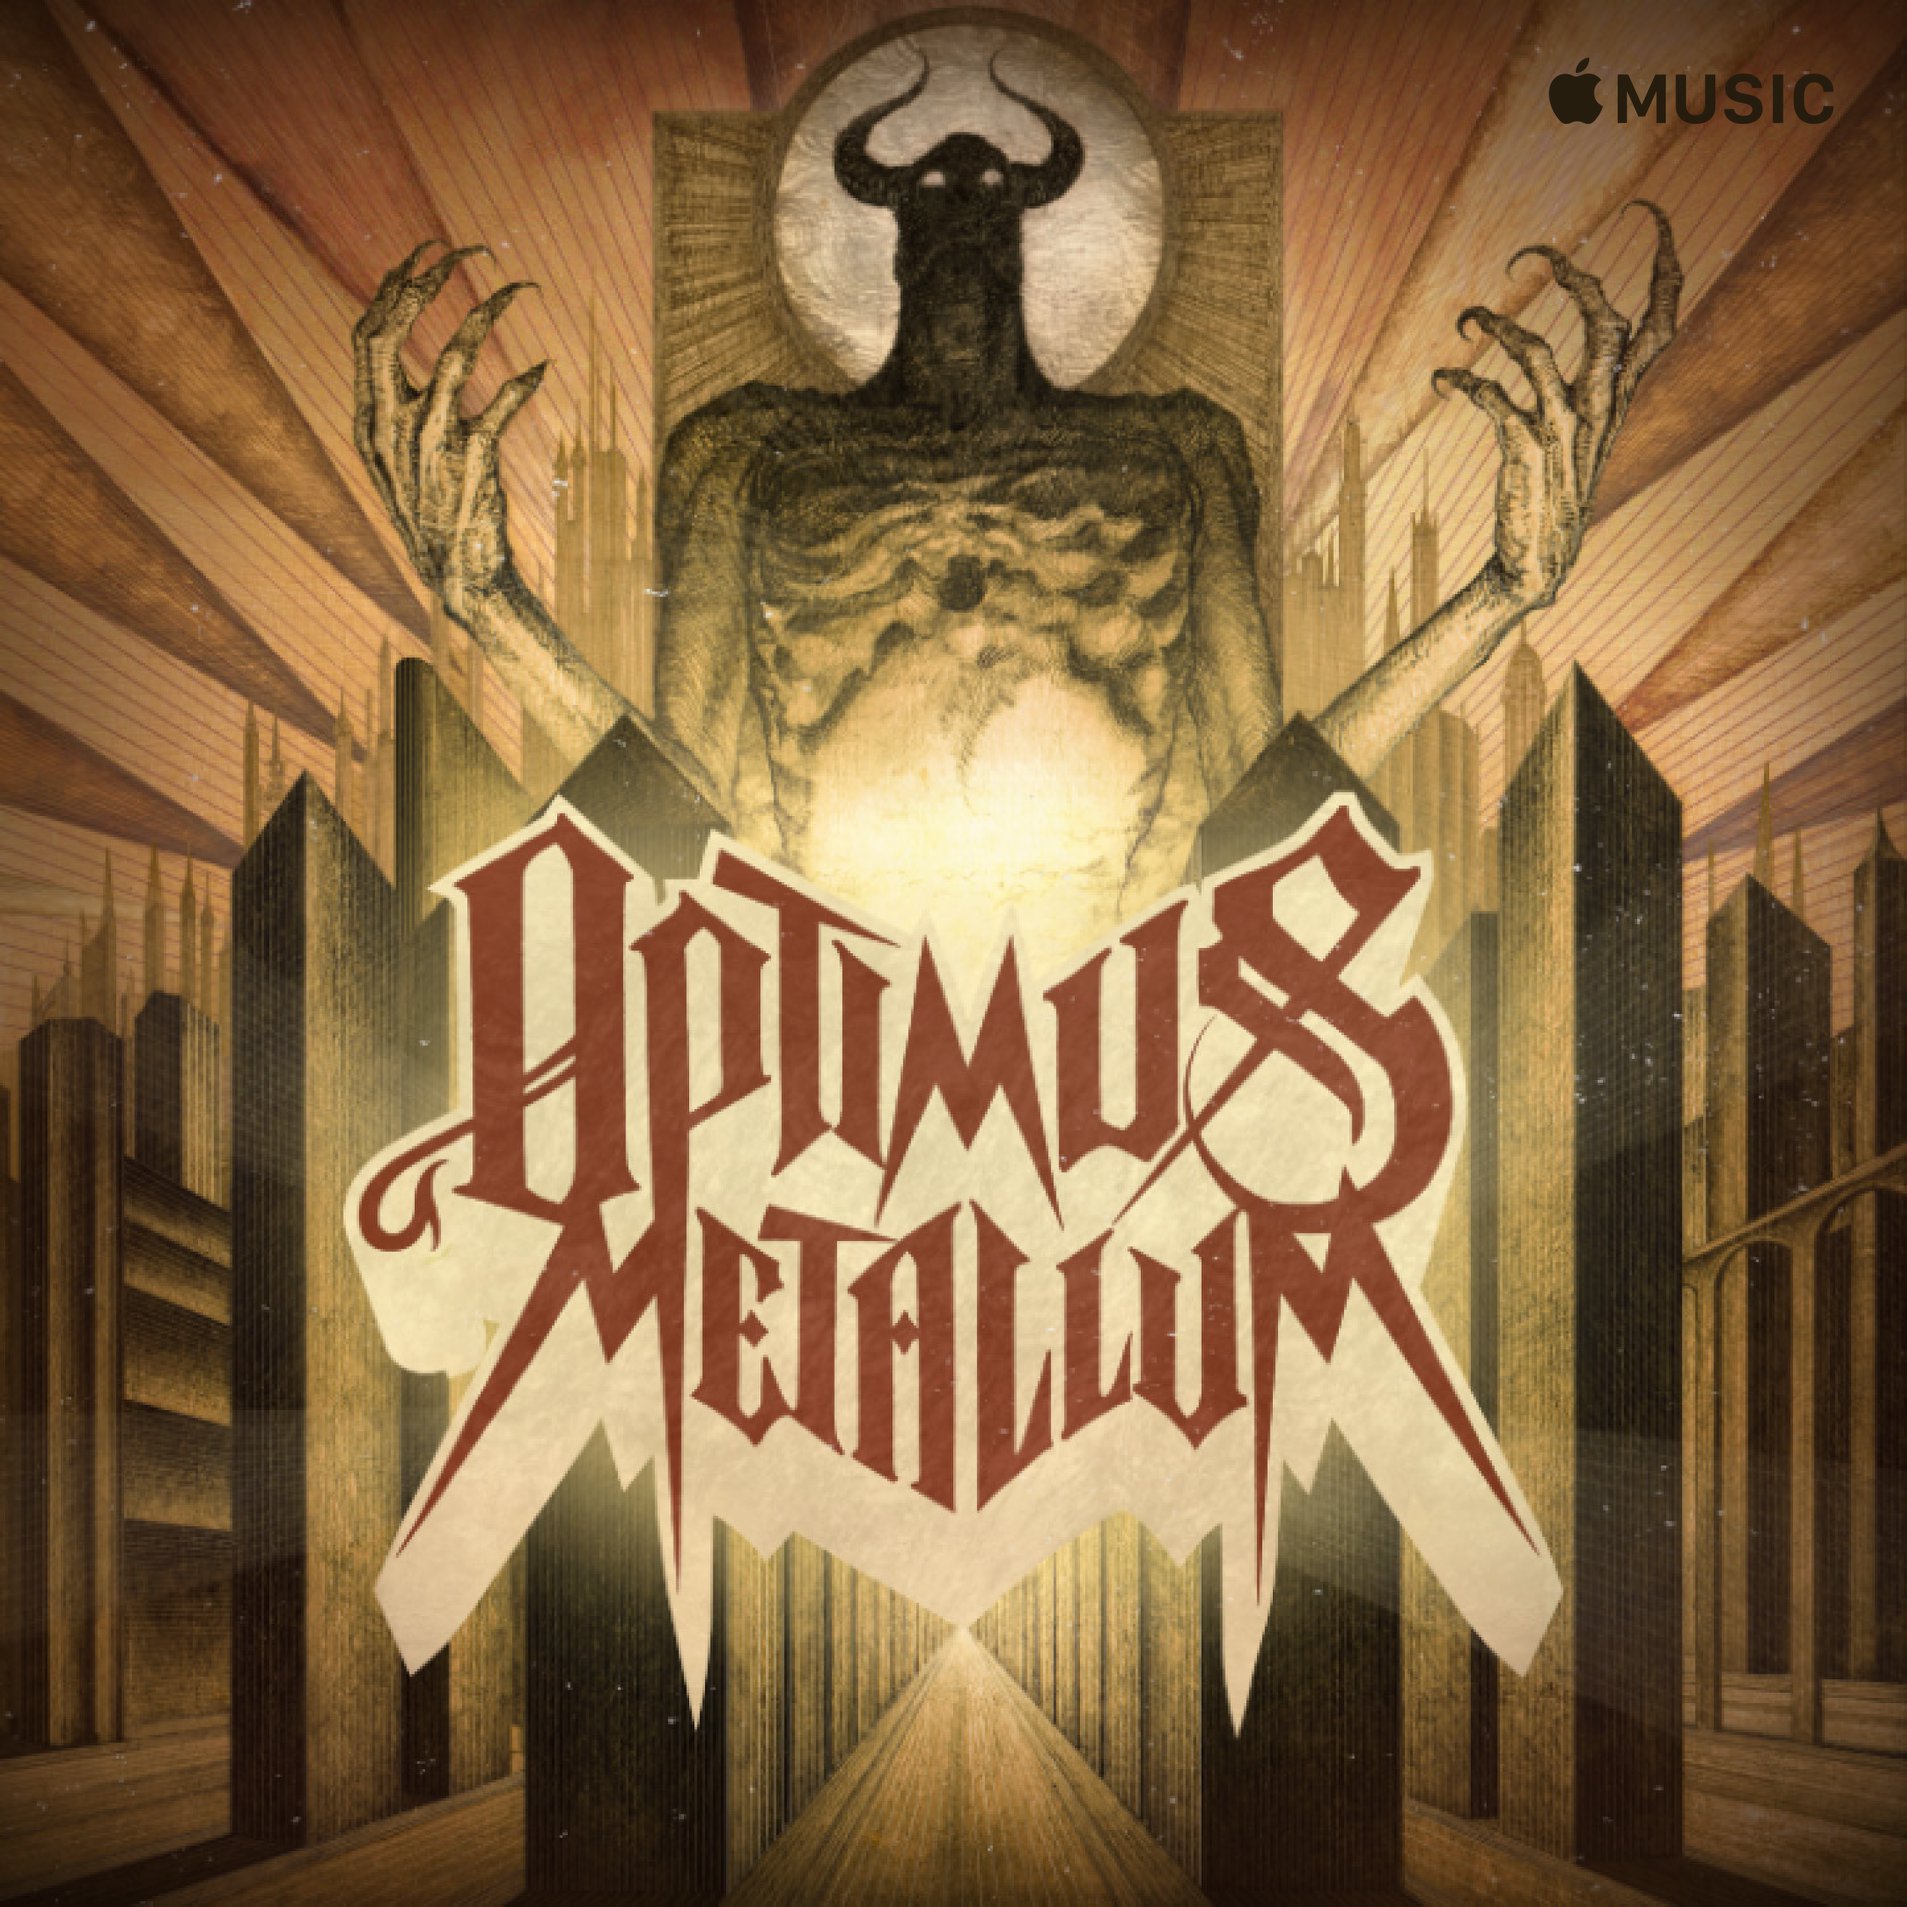 Optimus Metallum - Playlist - Apple Music